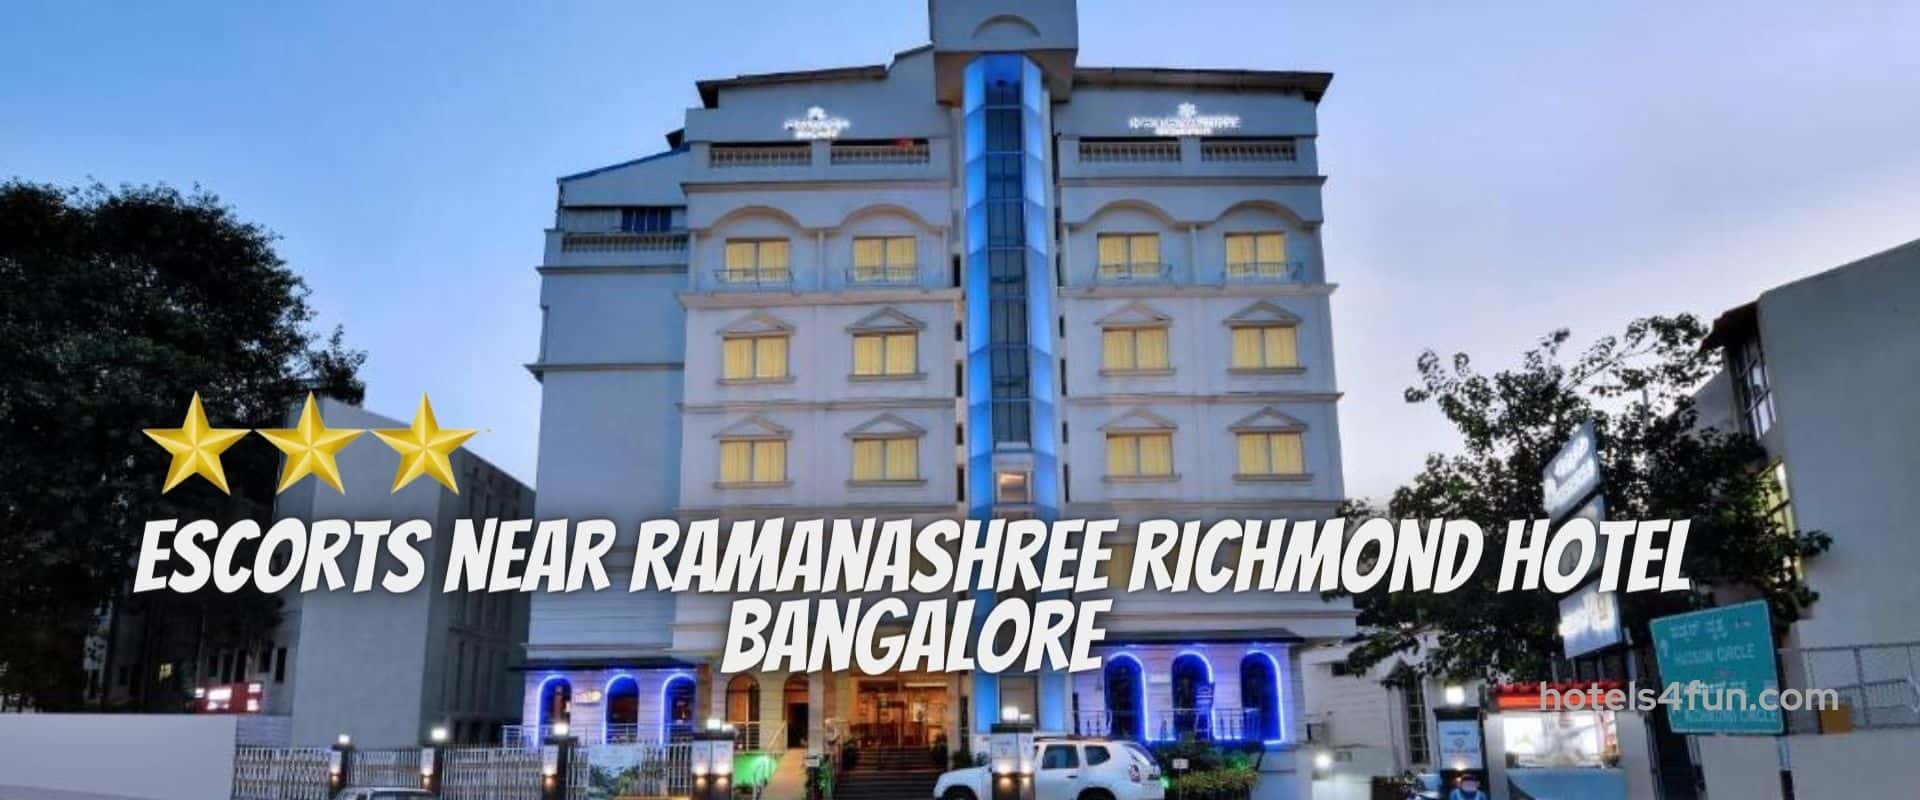 escorts-near-ramanashree-richmond-hotel-bangalore Hotel Escorts